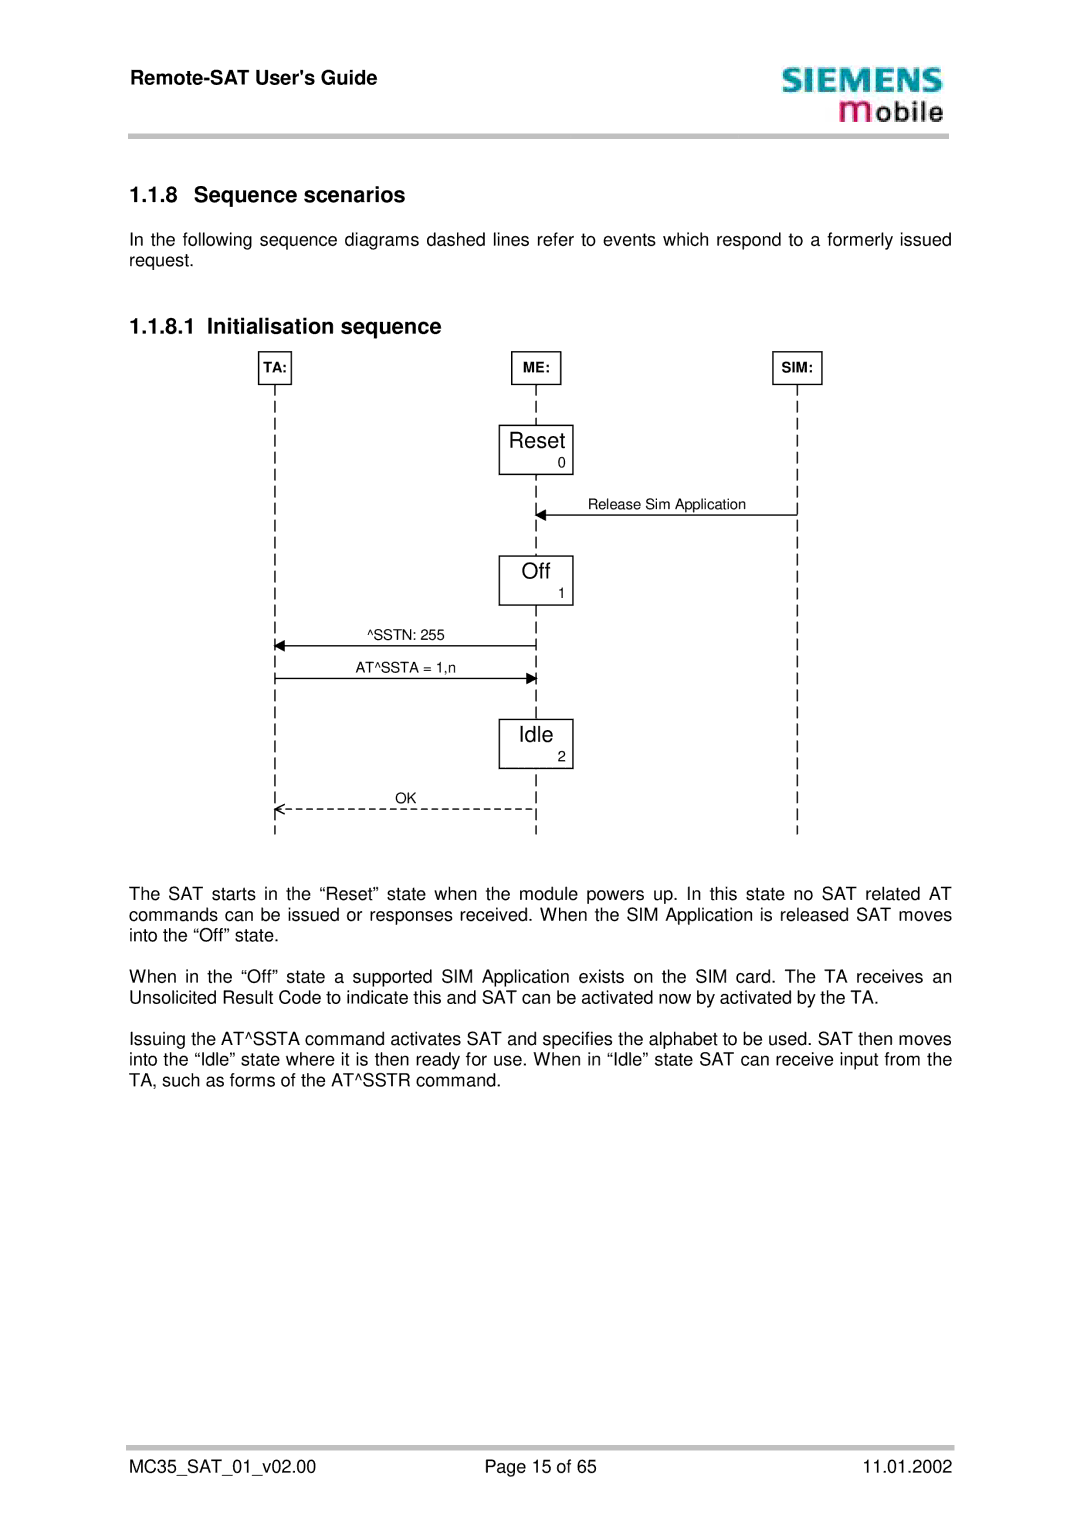 Siemens MC35 manual Sequence scenarios, Initialisation sequence 